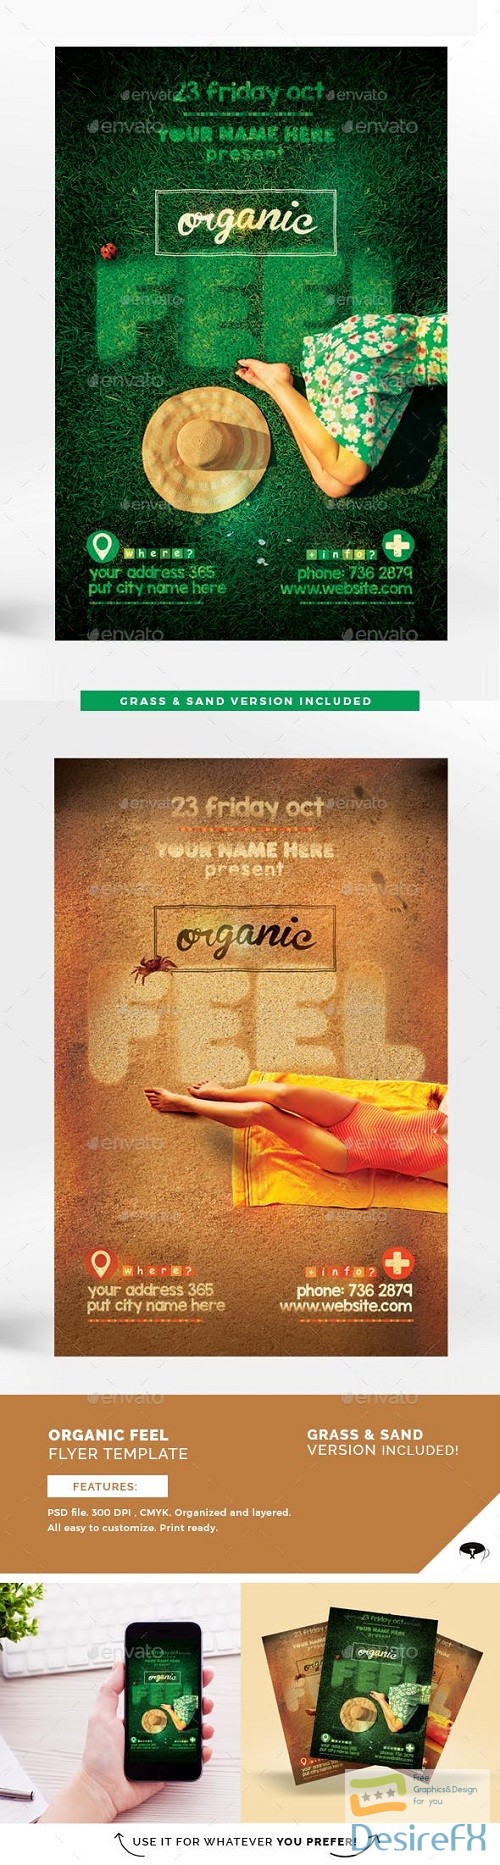 Organic Feel Flyer Template Grass & Sand Version 13417591